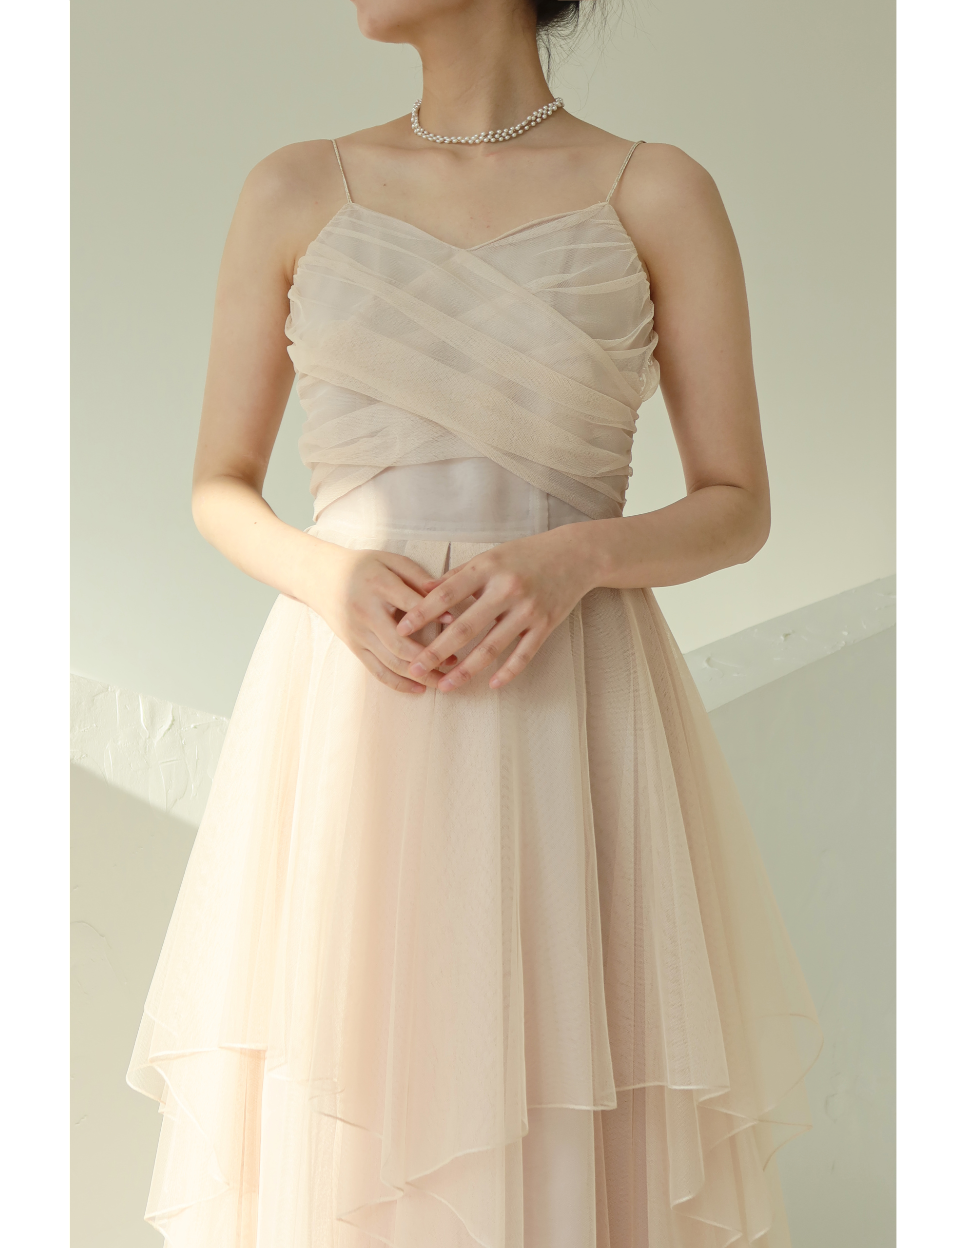 Peach Tulle Dress